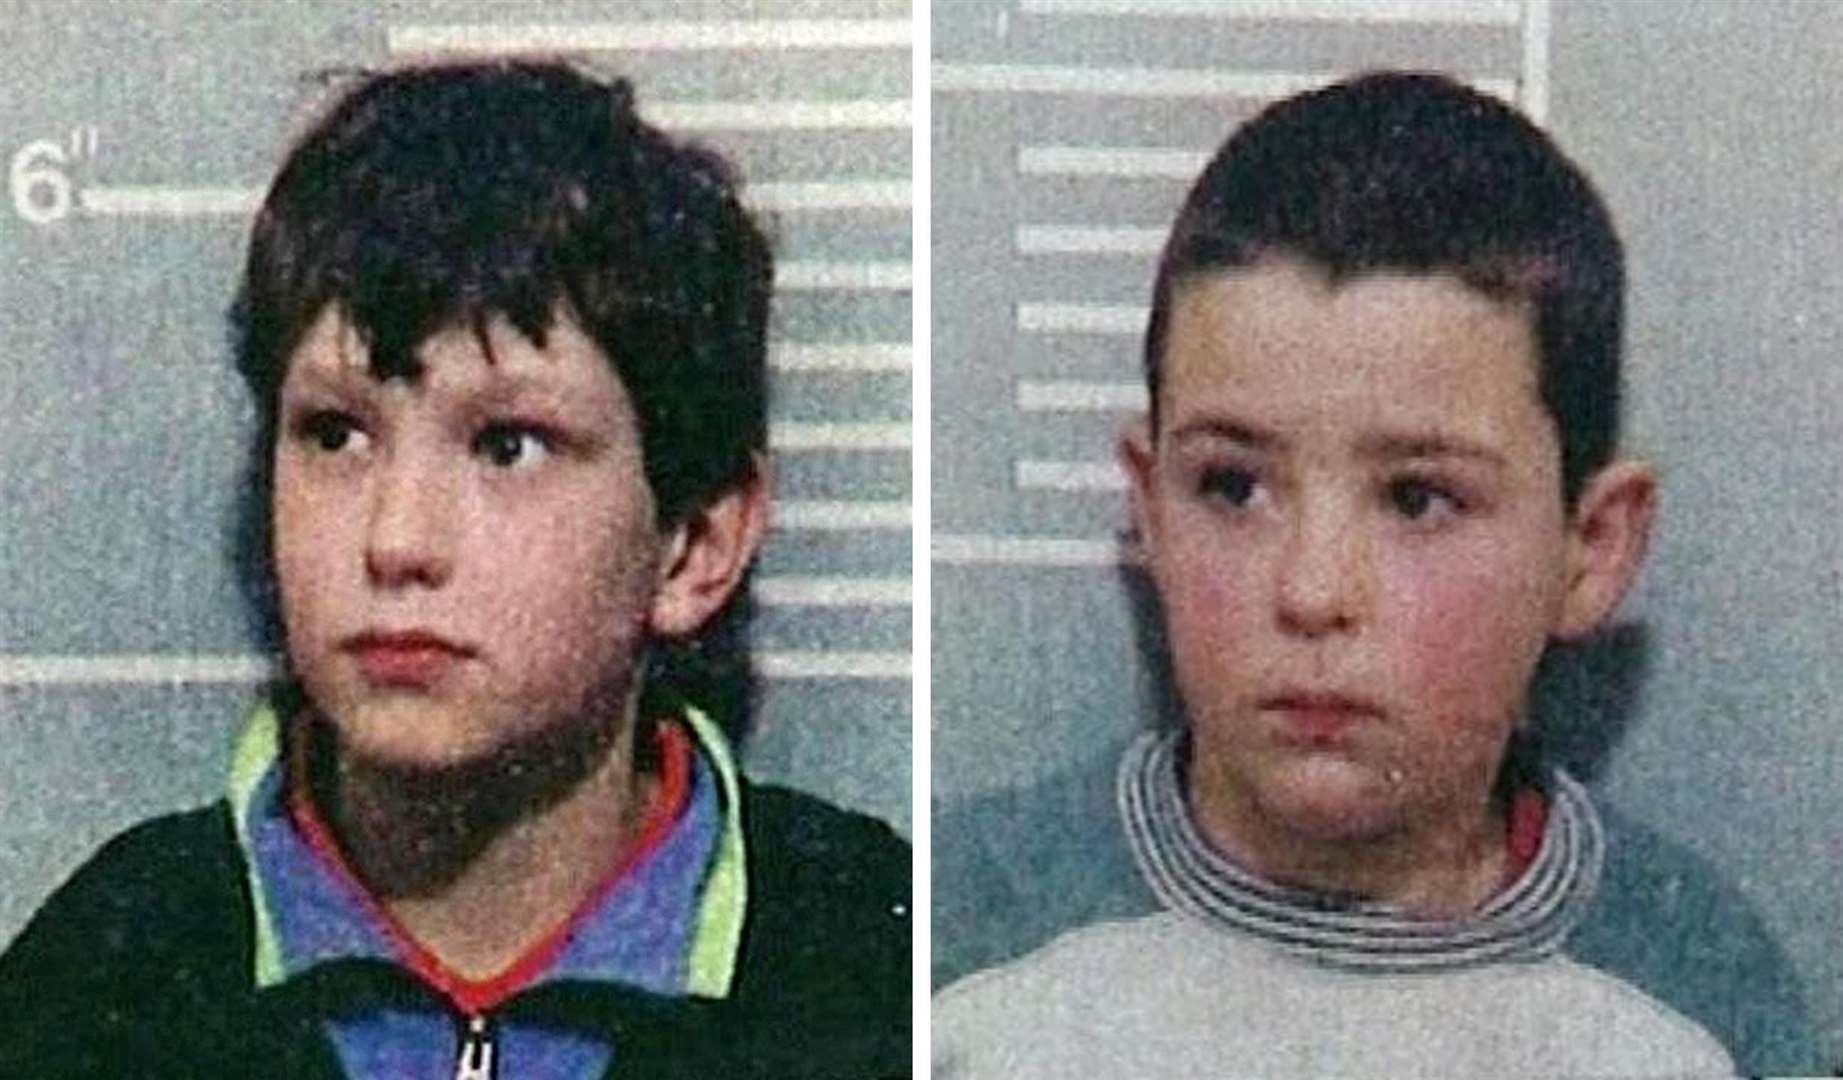 Mugshots of Jon Venables (left) and Robert Thompson, both aged 10 (PA Media)